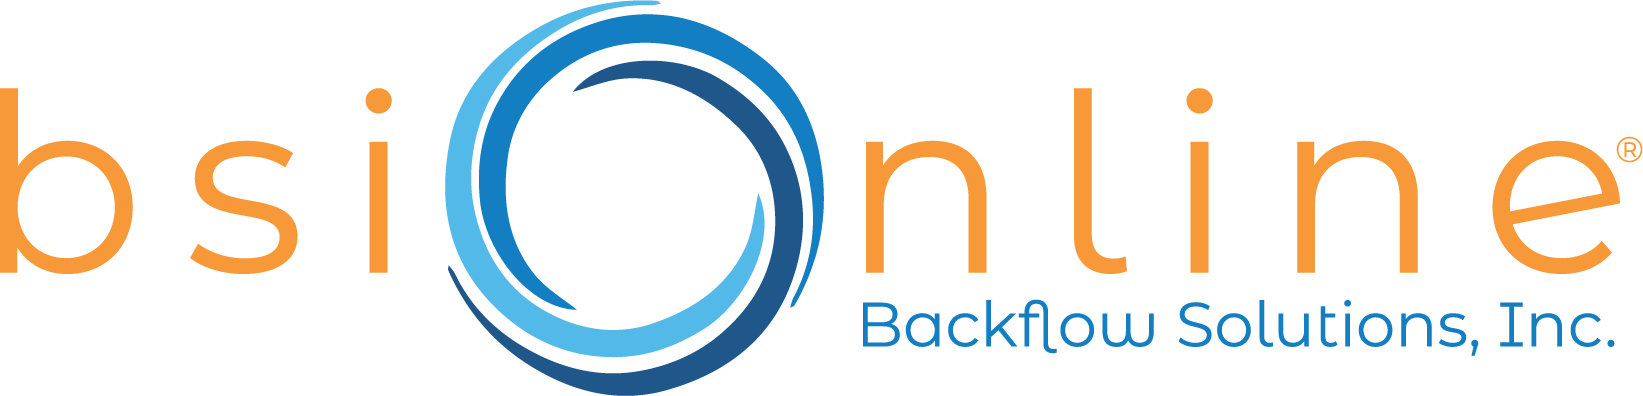 Backflow Solutions, Inc. Logo